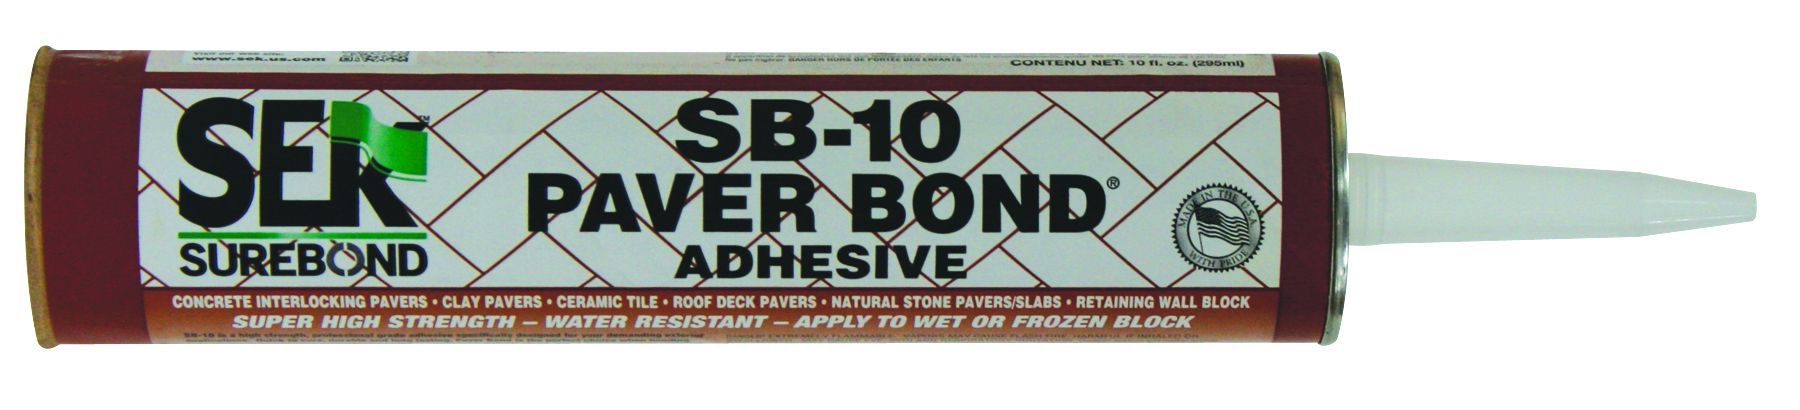 SB-10 Paver Bond Adhesive